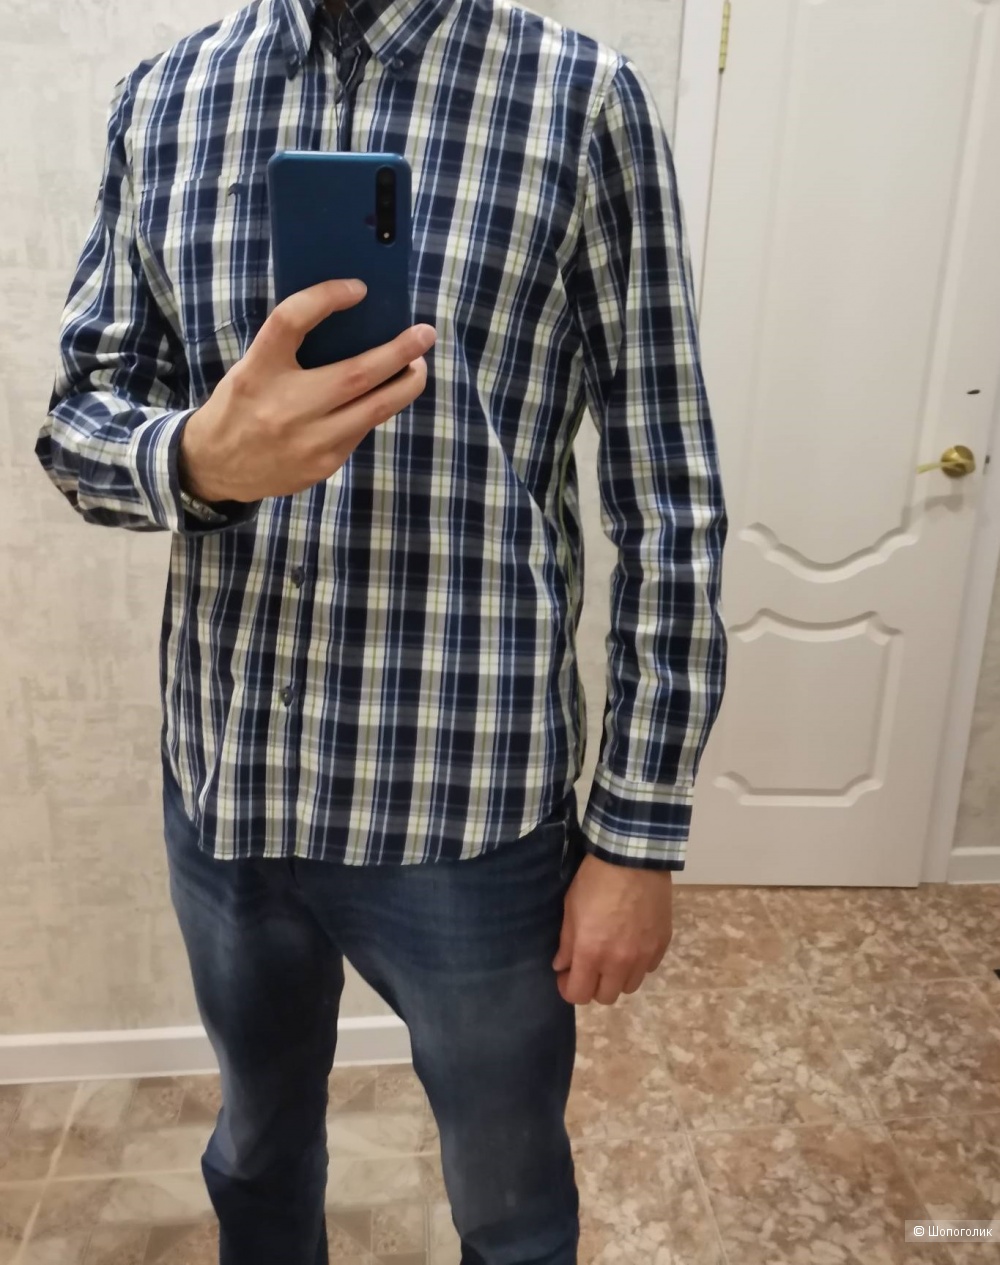 Мужская рубашка LERROS, размер 50